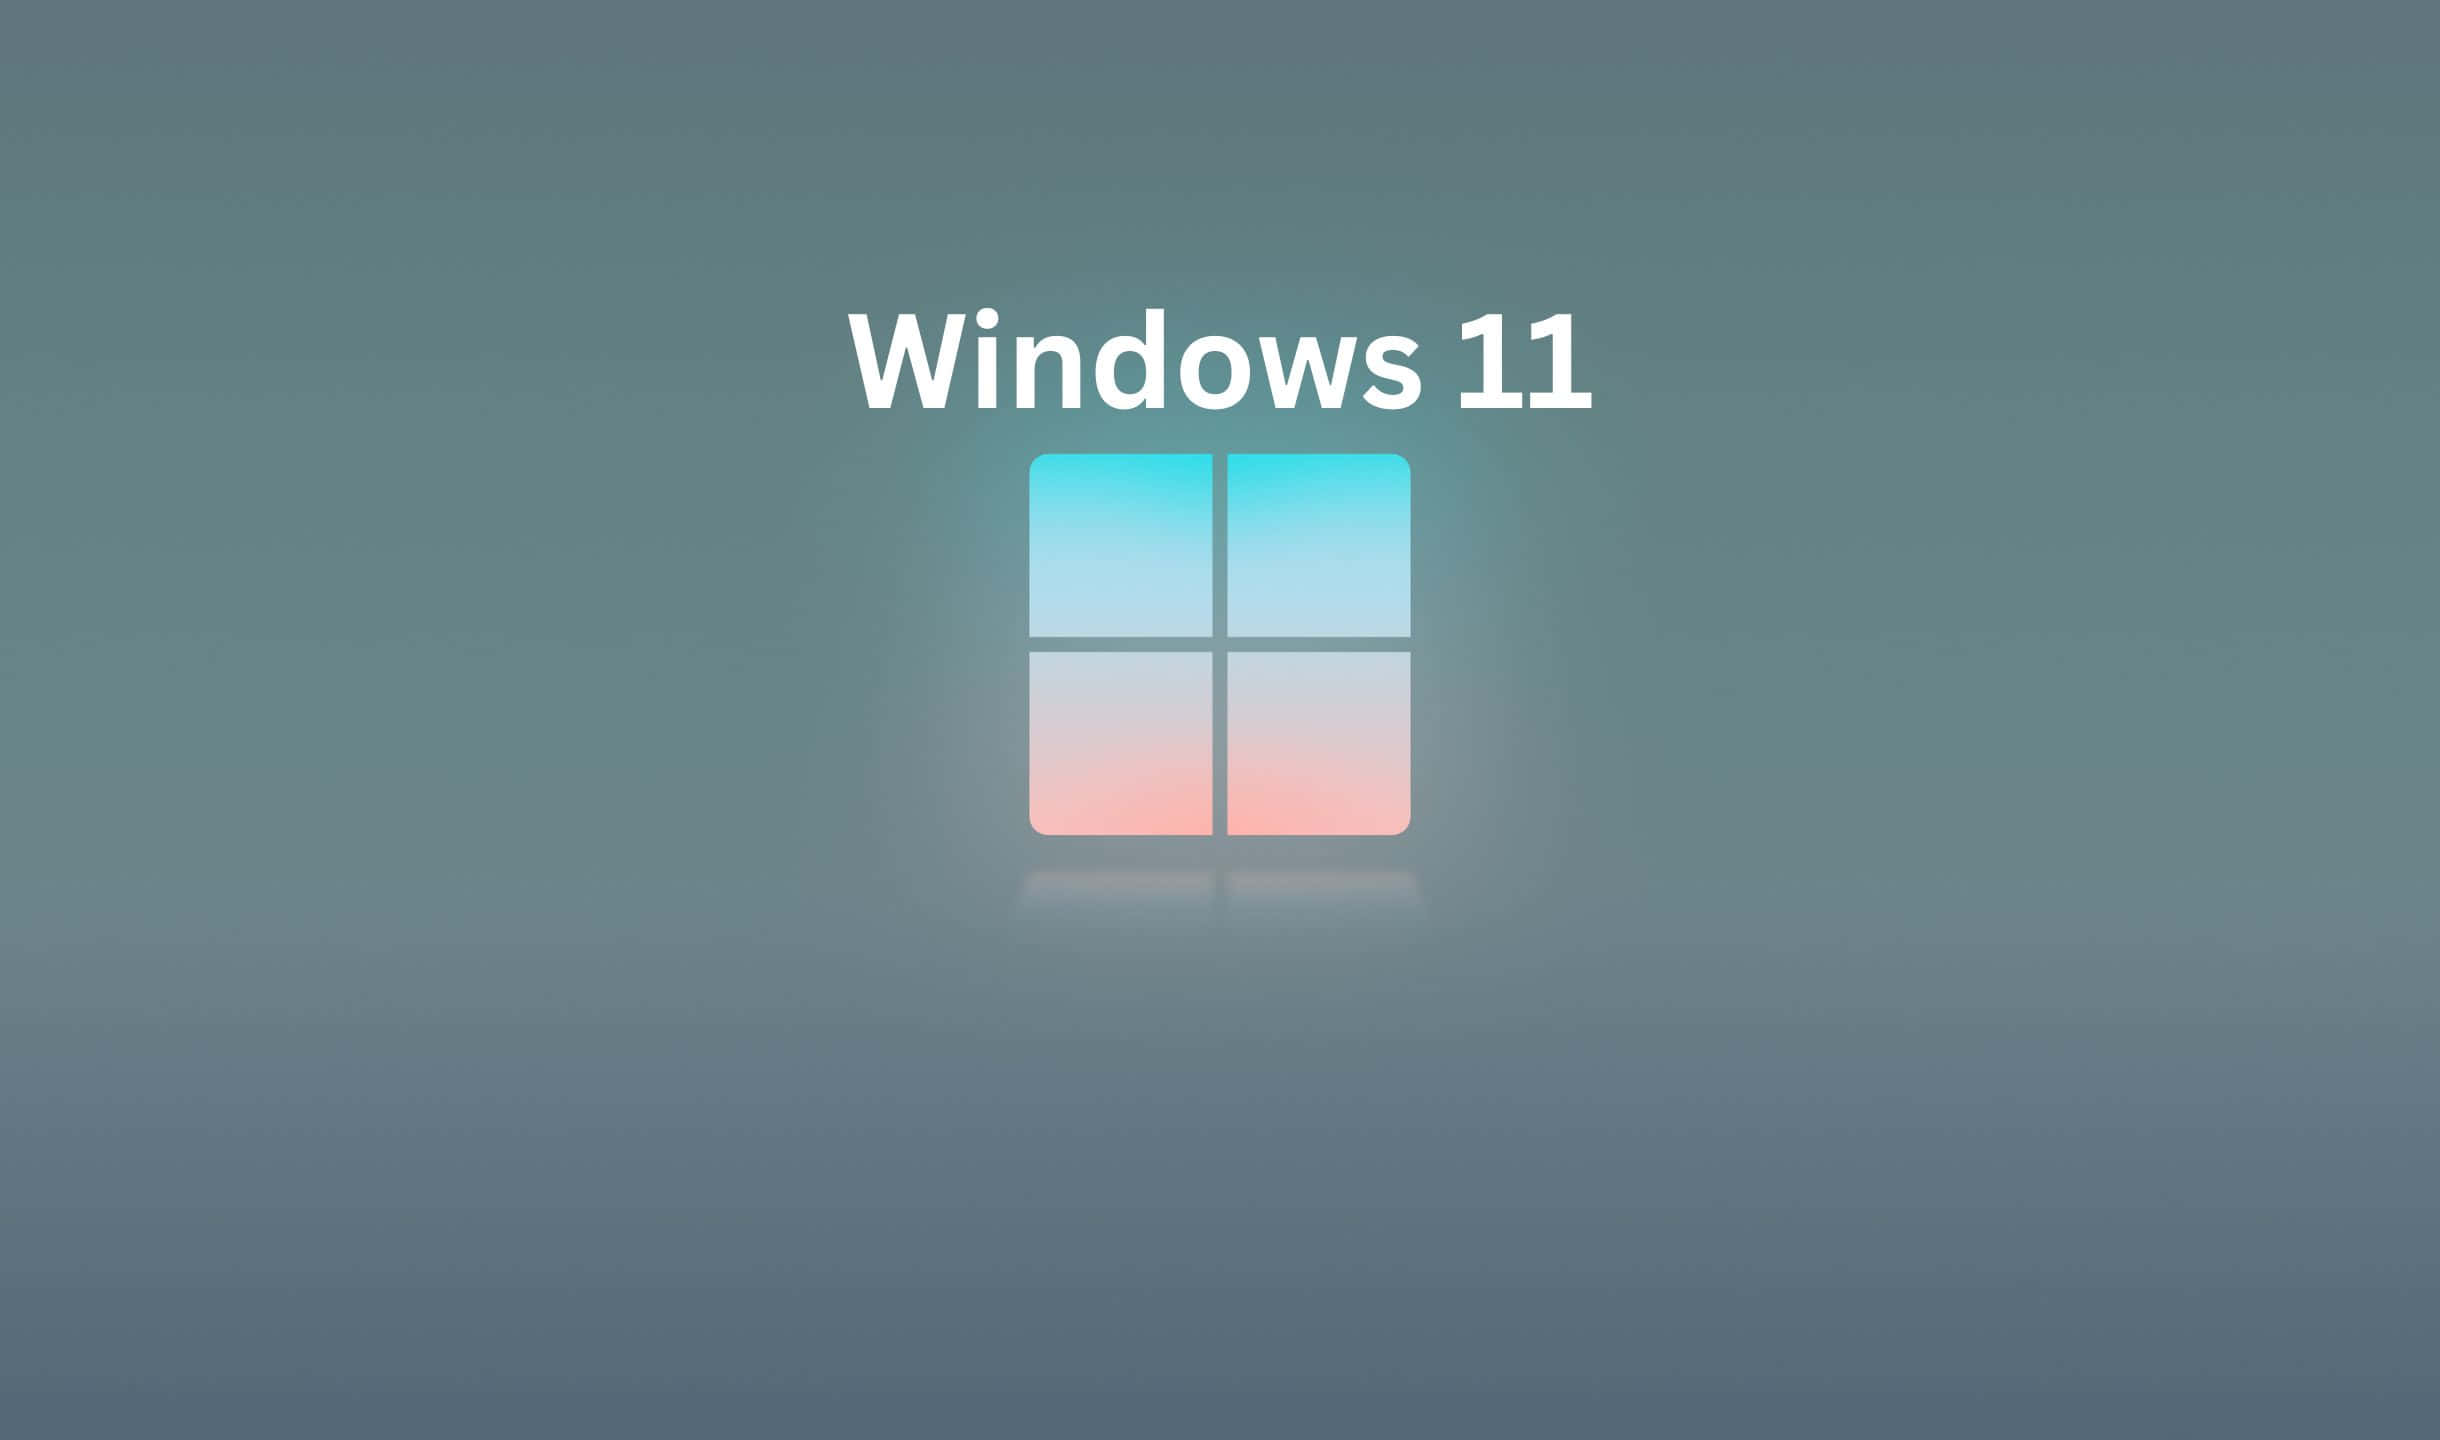 Windows 11 Logo On A Grey Background